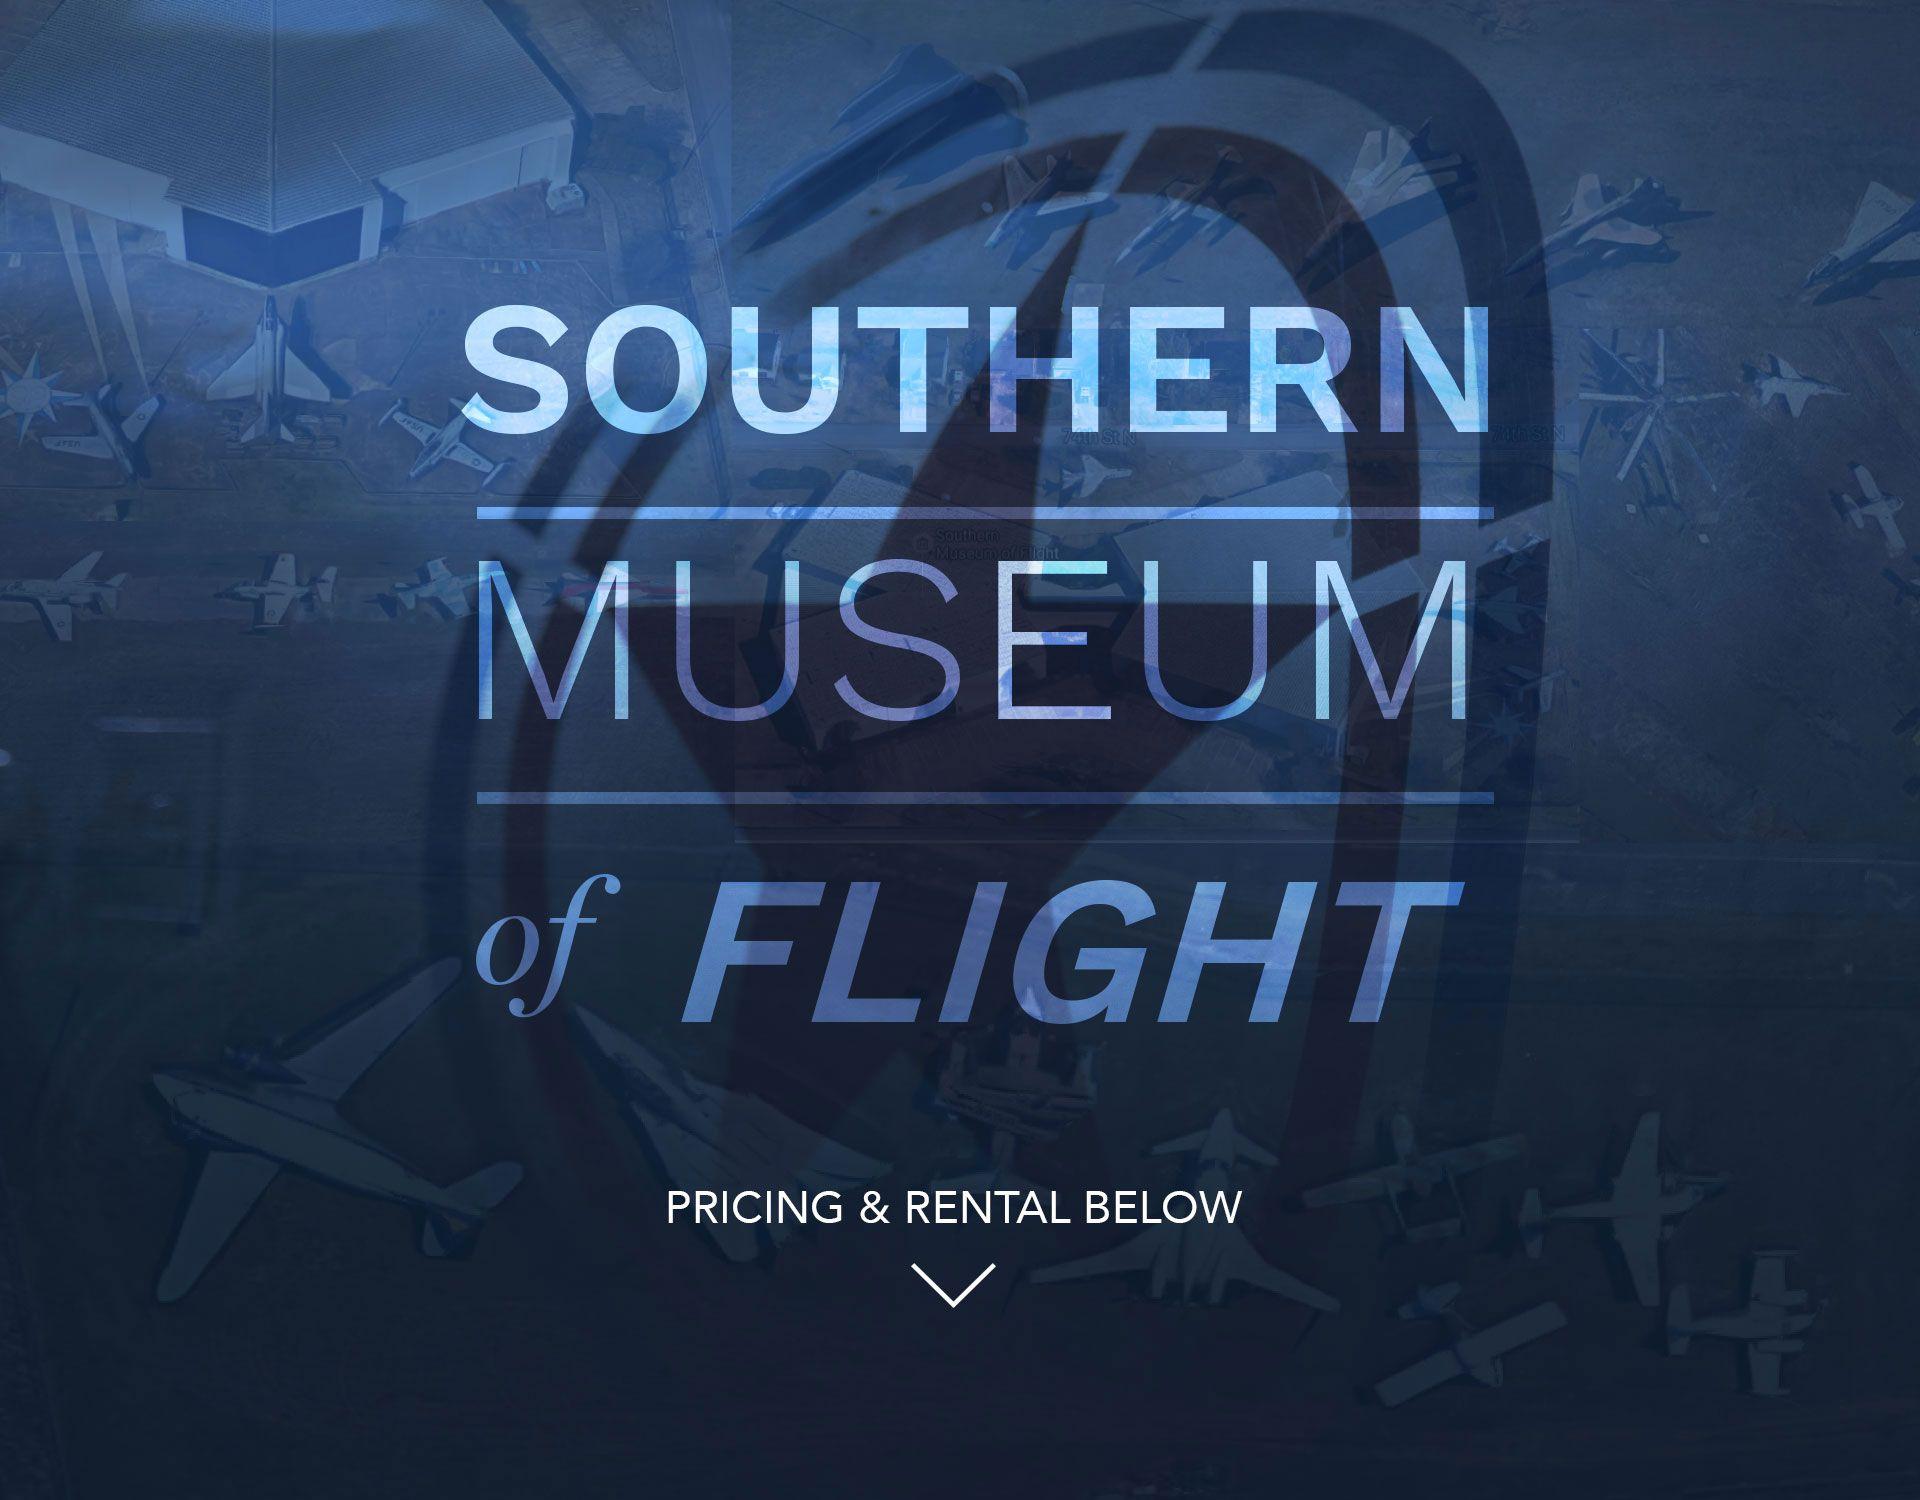 Museum of Flight Logo - Birmingham Wedding Venue and Facility Rental - Southern Museum of Flight